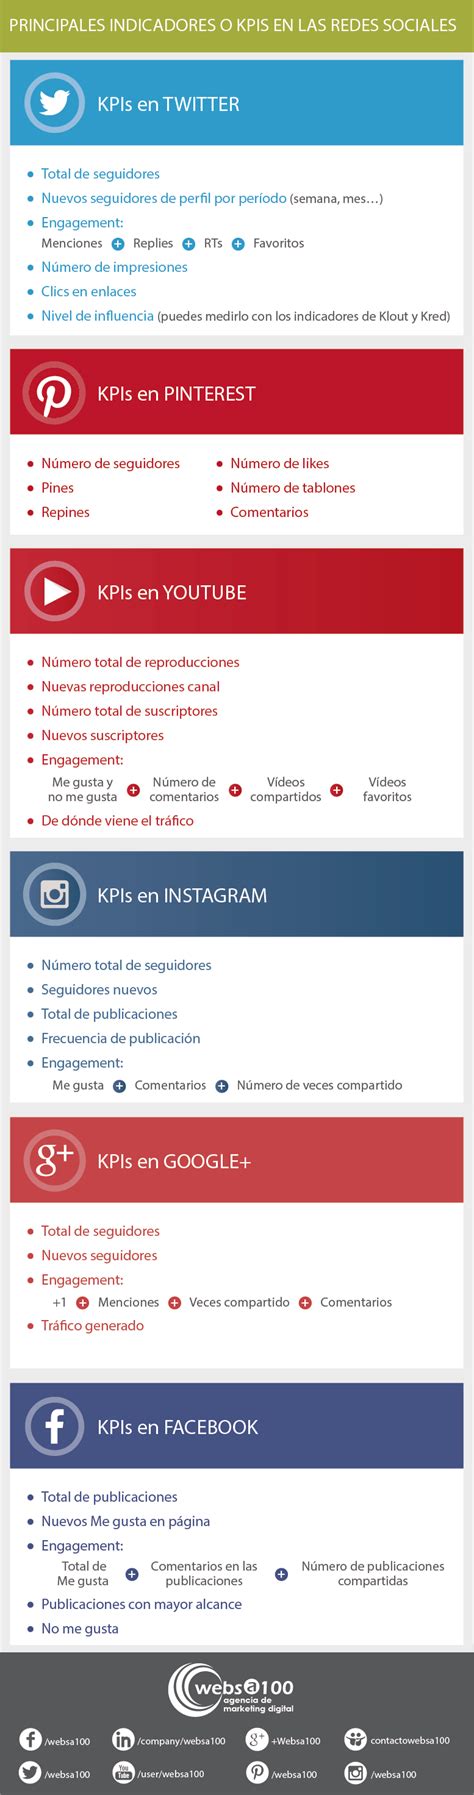 Infograf A Kpis En Redes Sociales Redes Sociales Consejos Para Redes